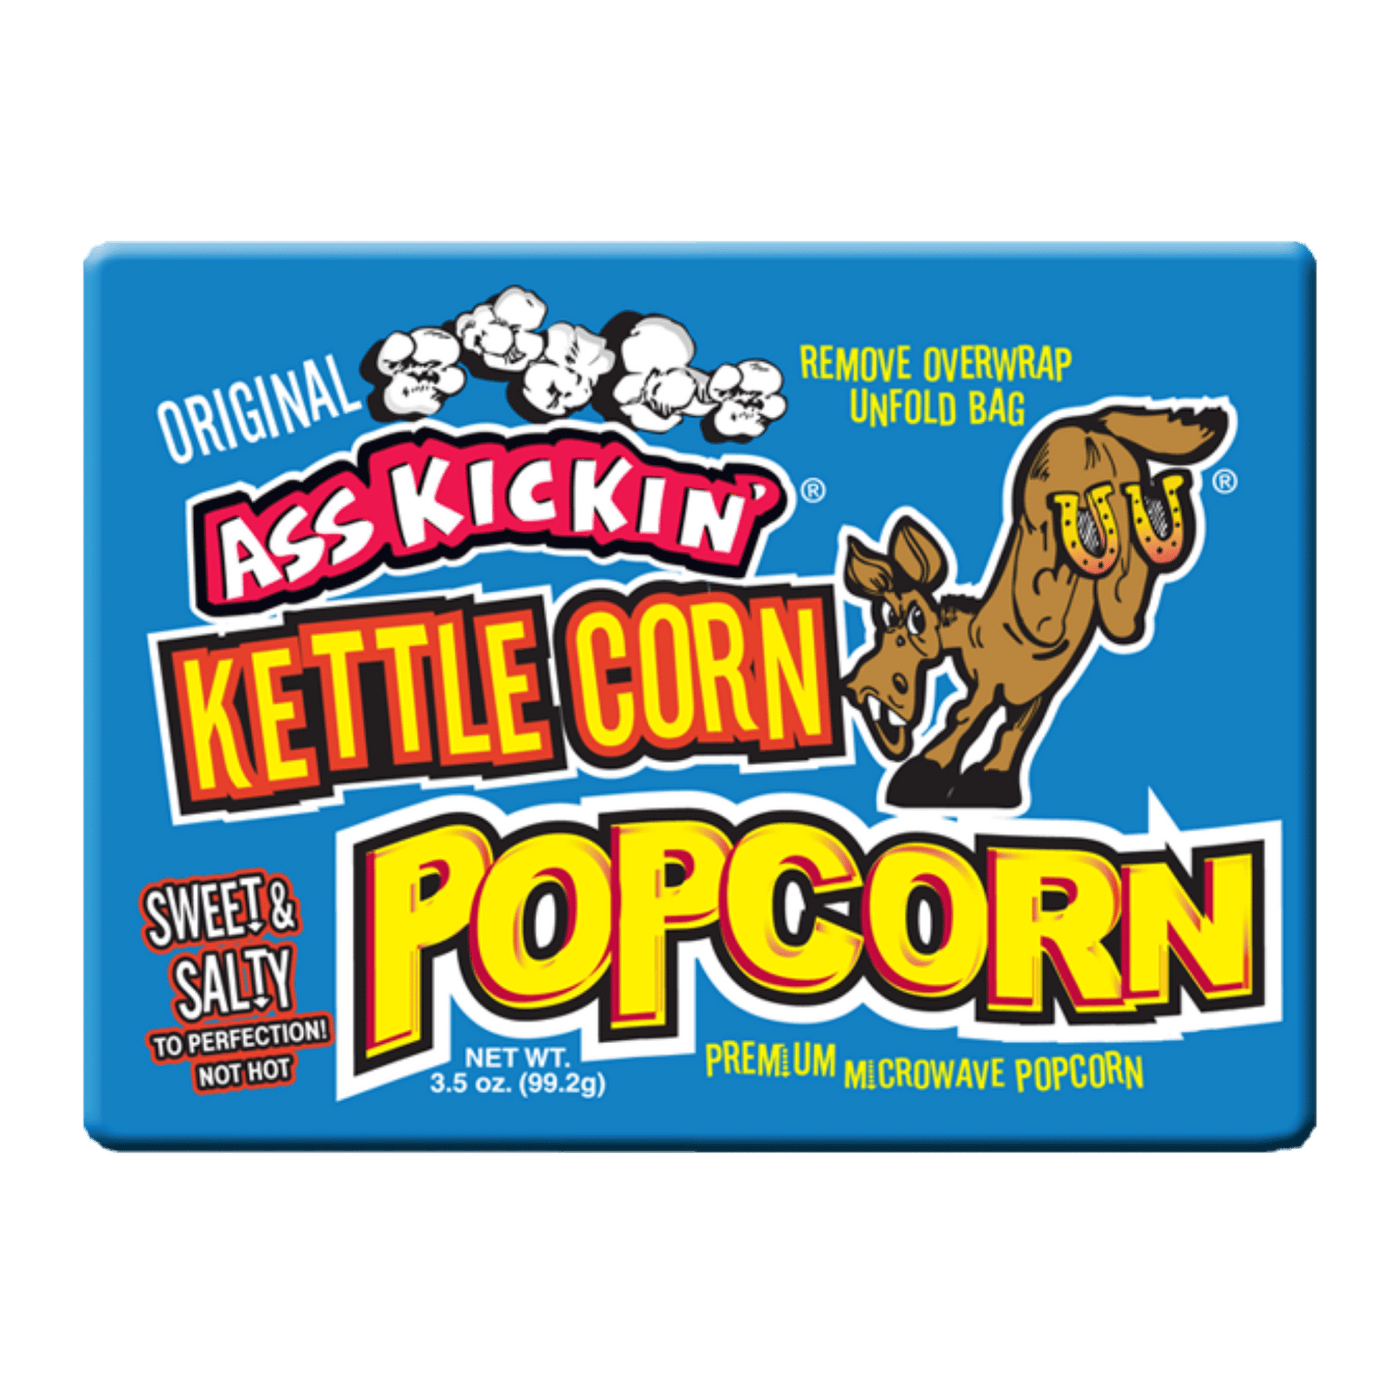 Popcorn Ass Kickin'